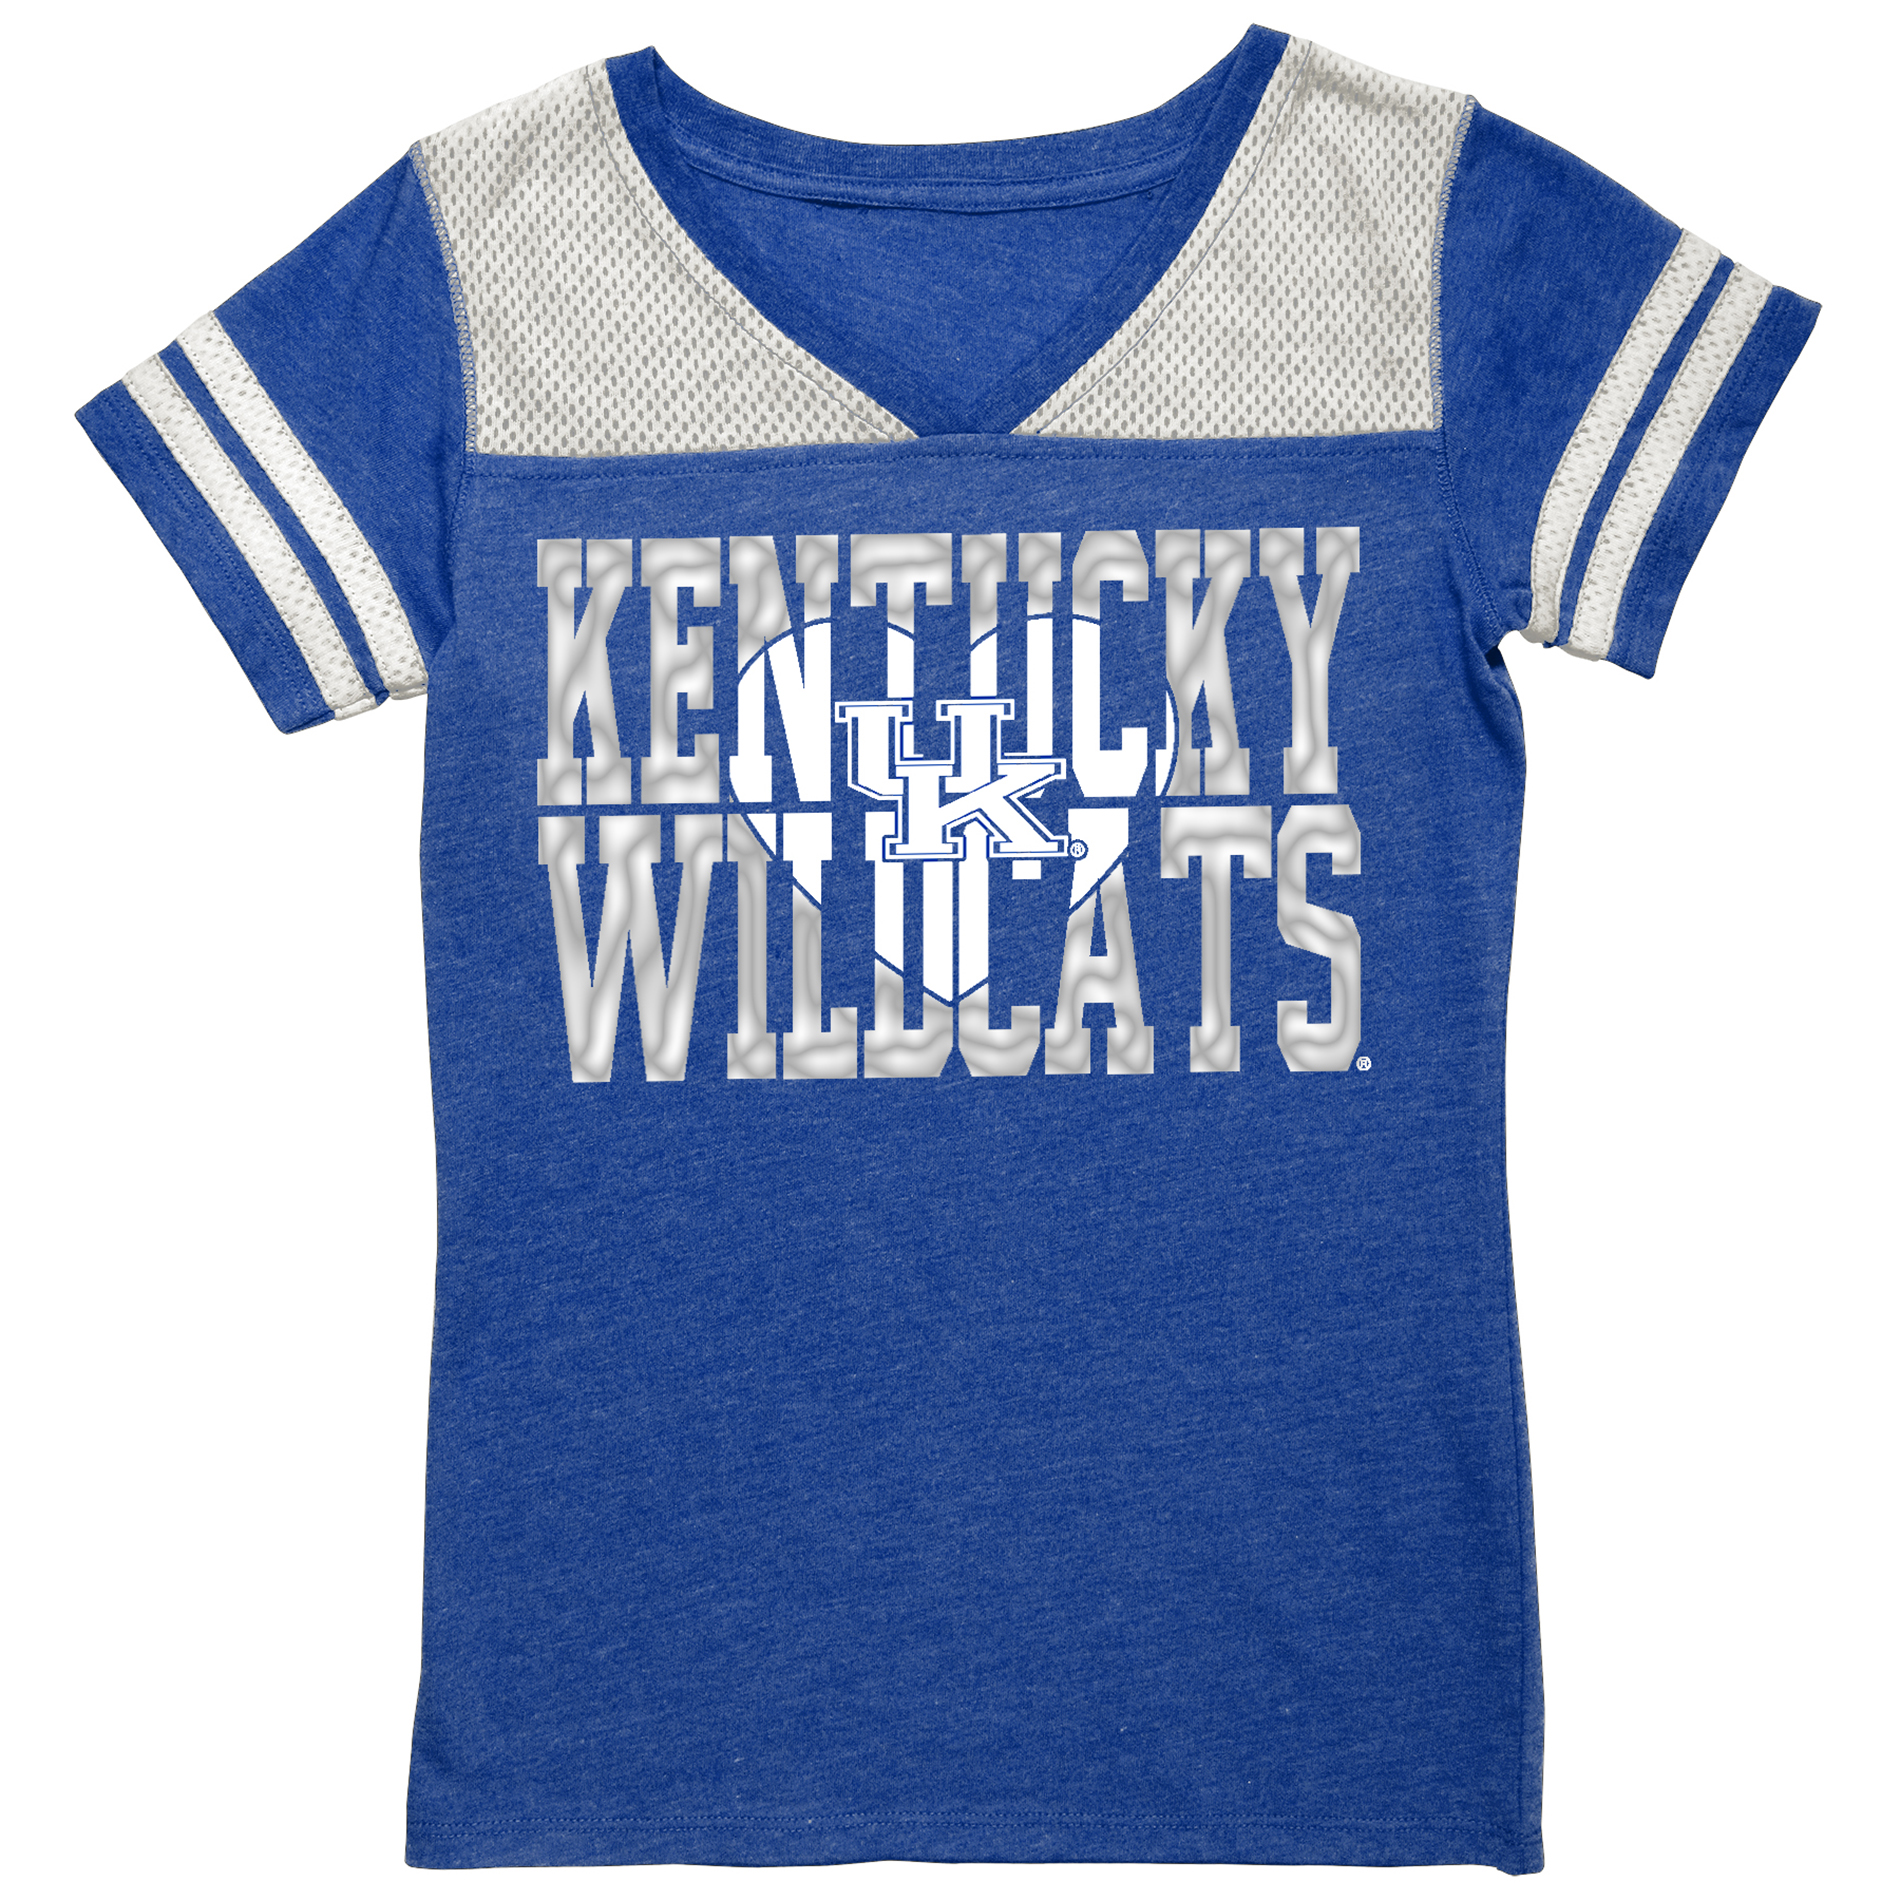 NCAA Girls' University of Kentucky Wildcats Foil Tee